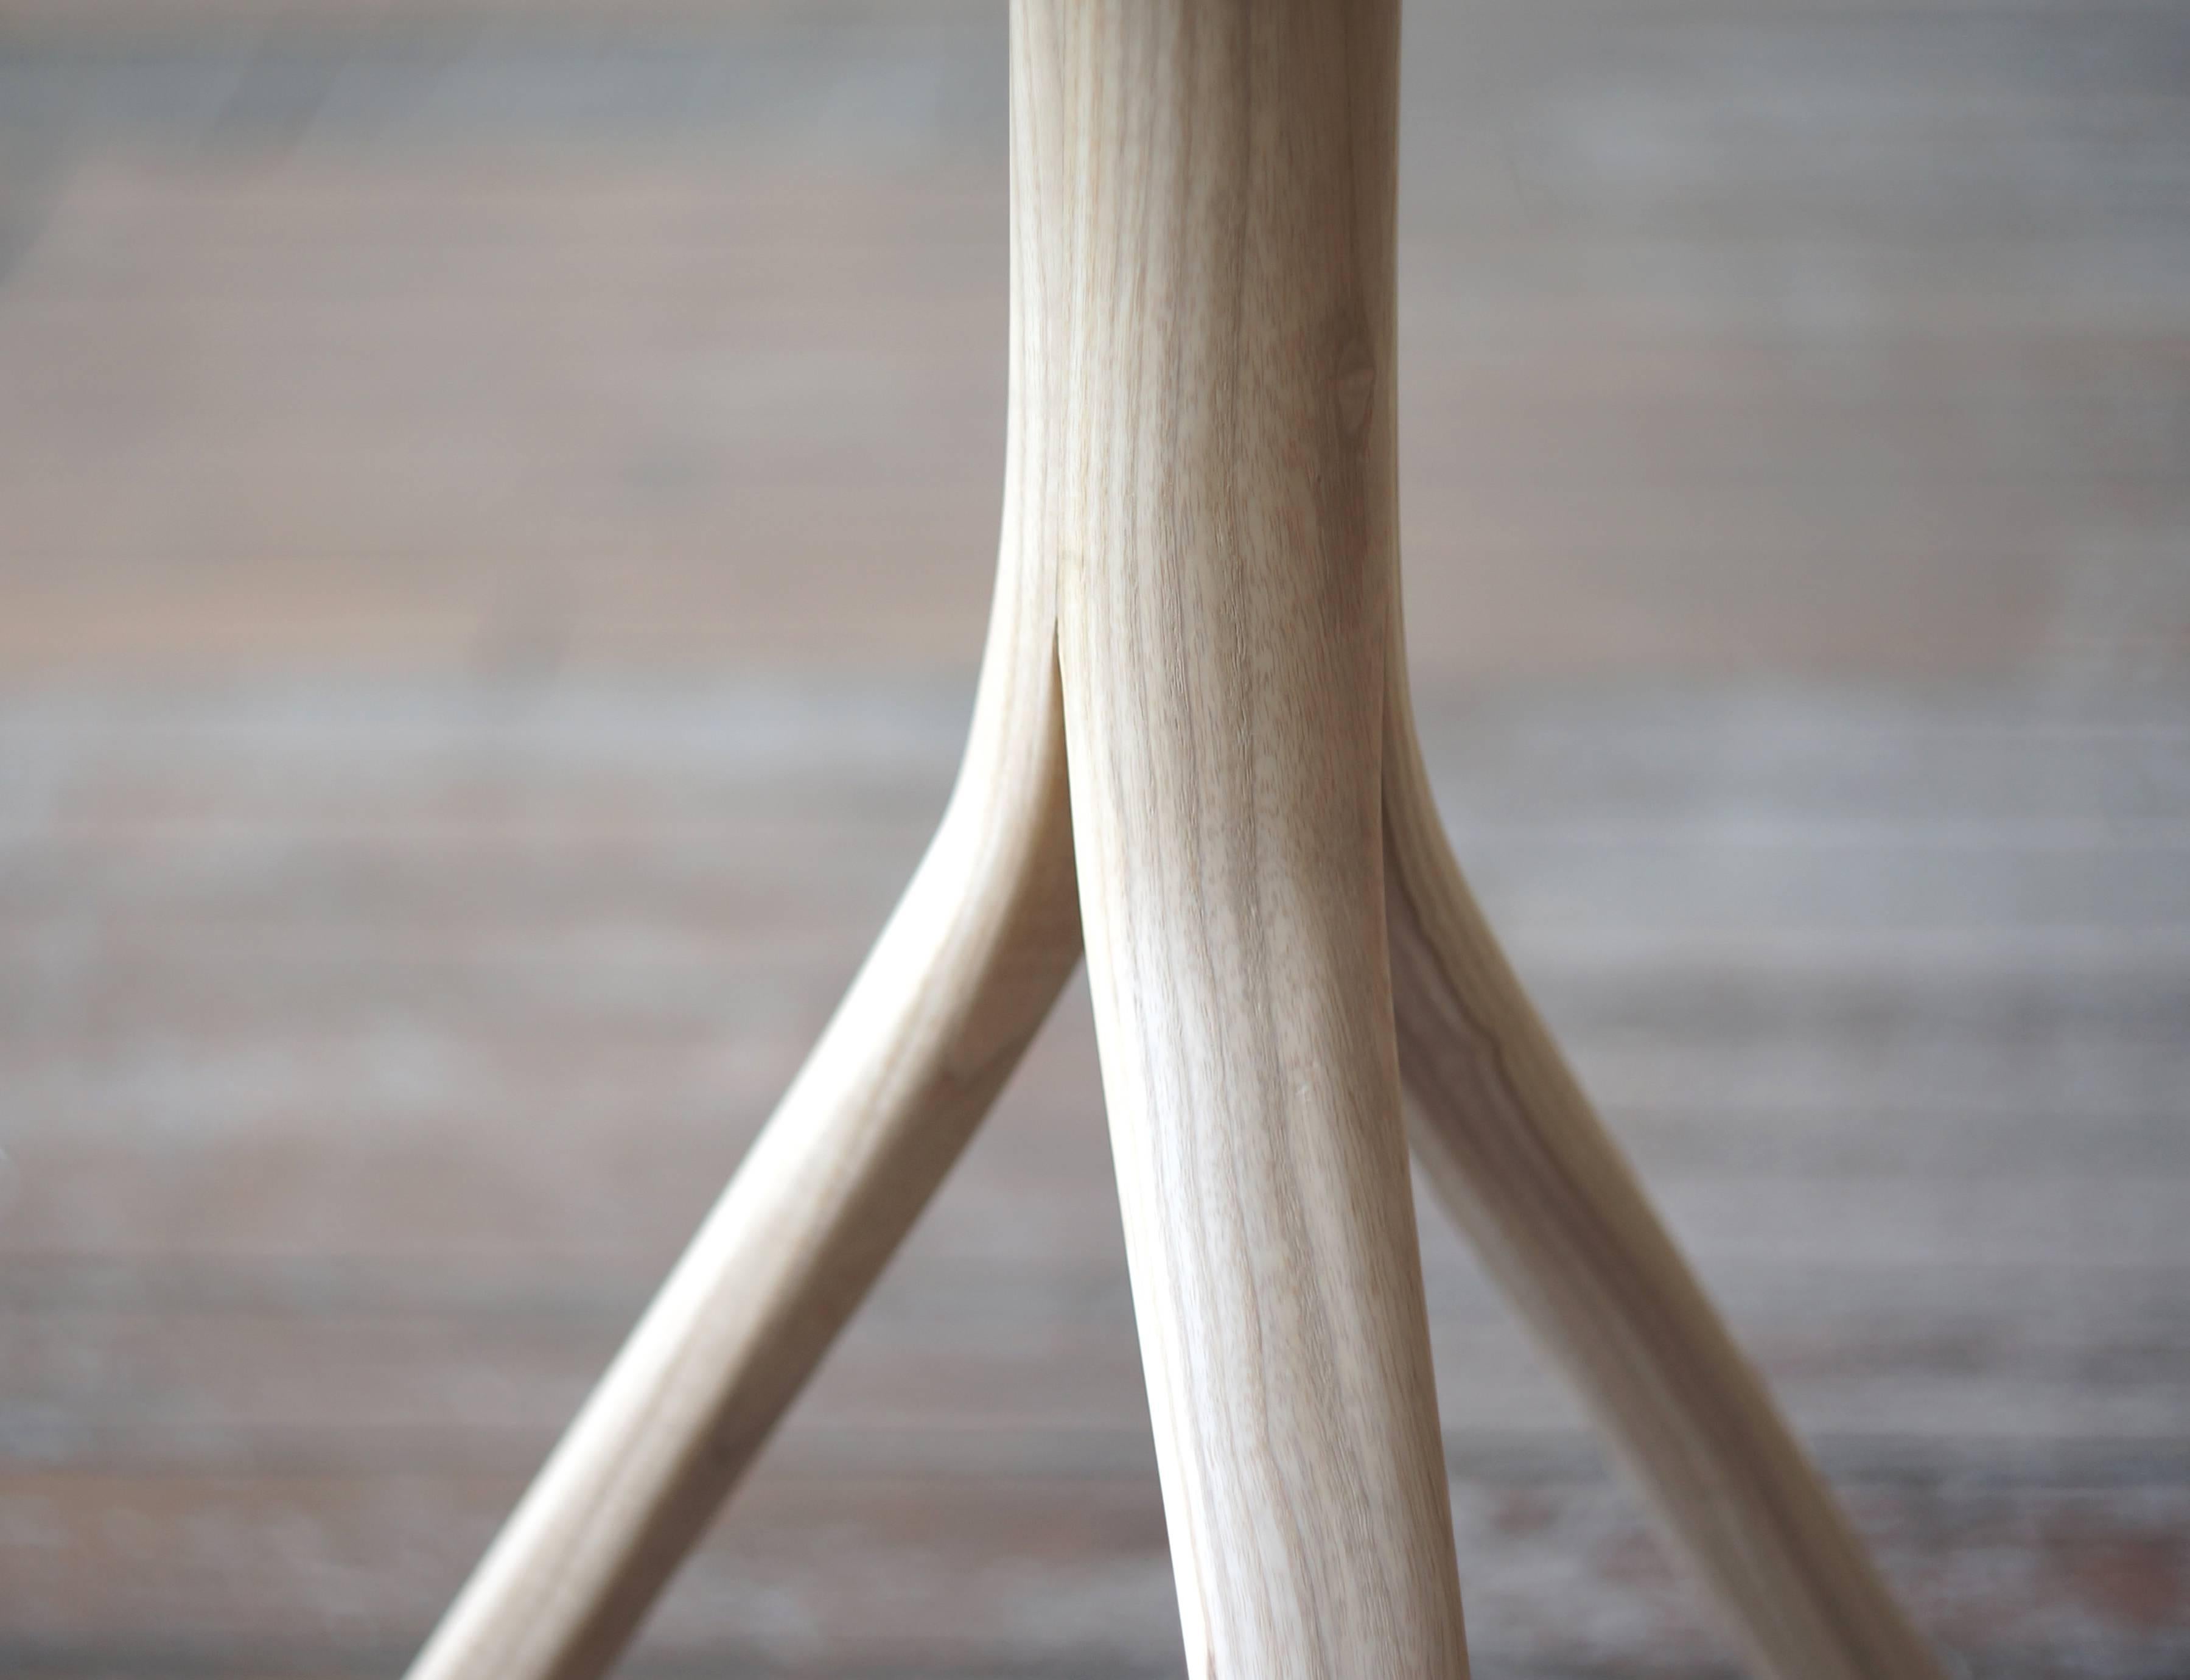 bent wood table legs